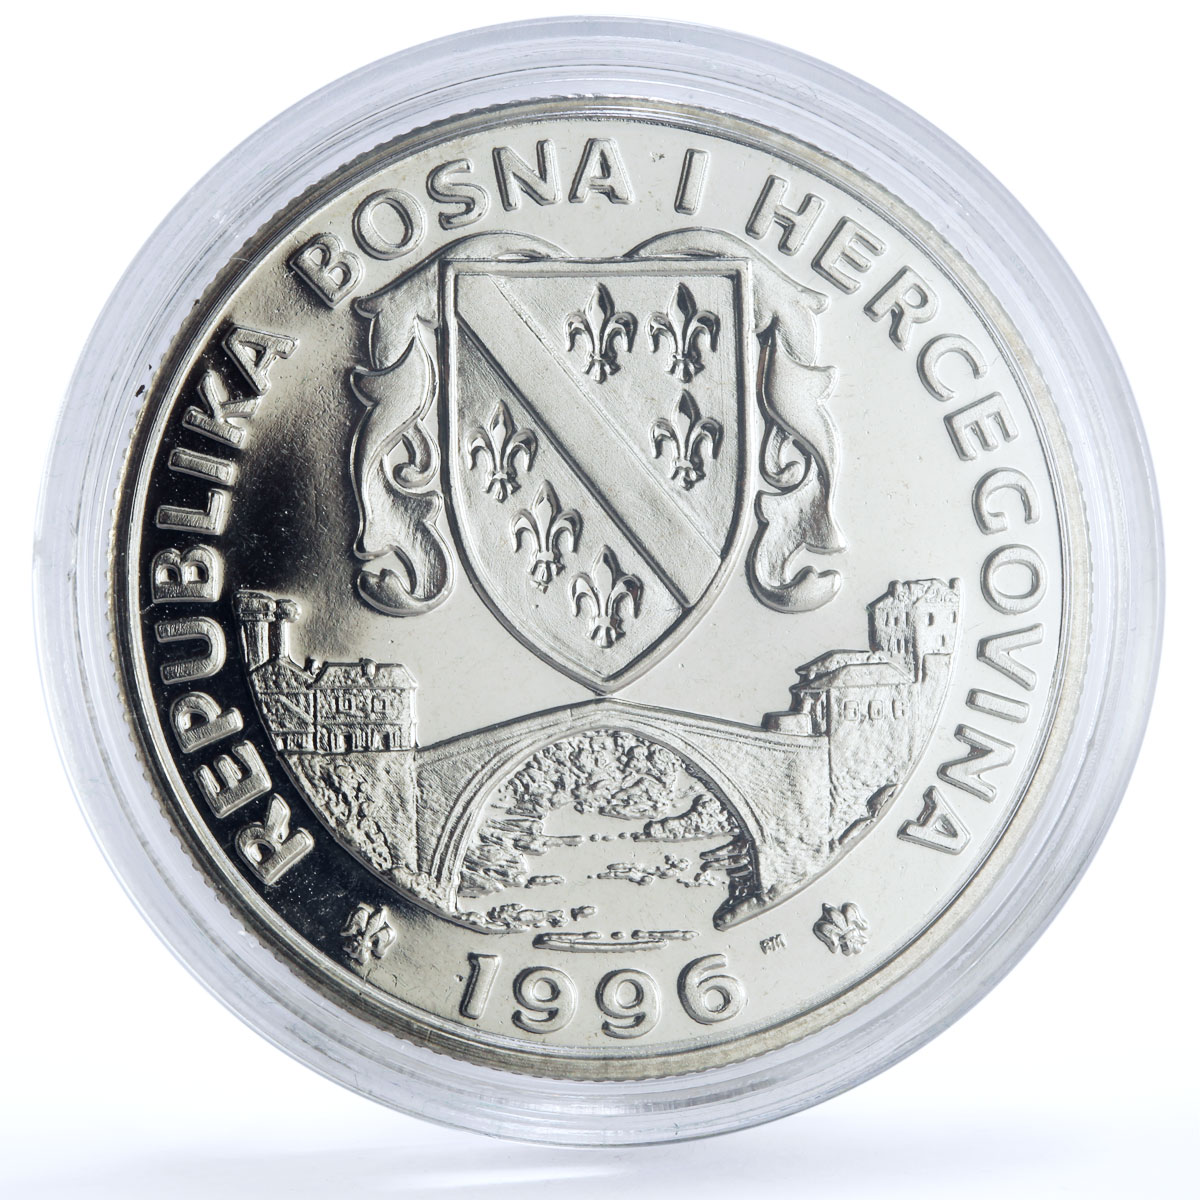 Bosnia and Herzegovina set of 4 coins Atlanta Olympic Games CuNi coins 1996